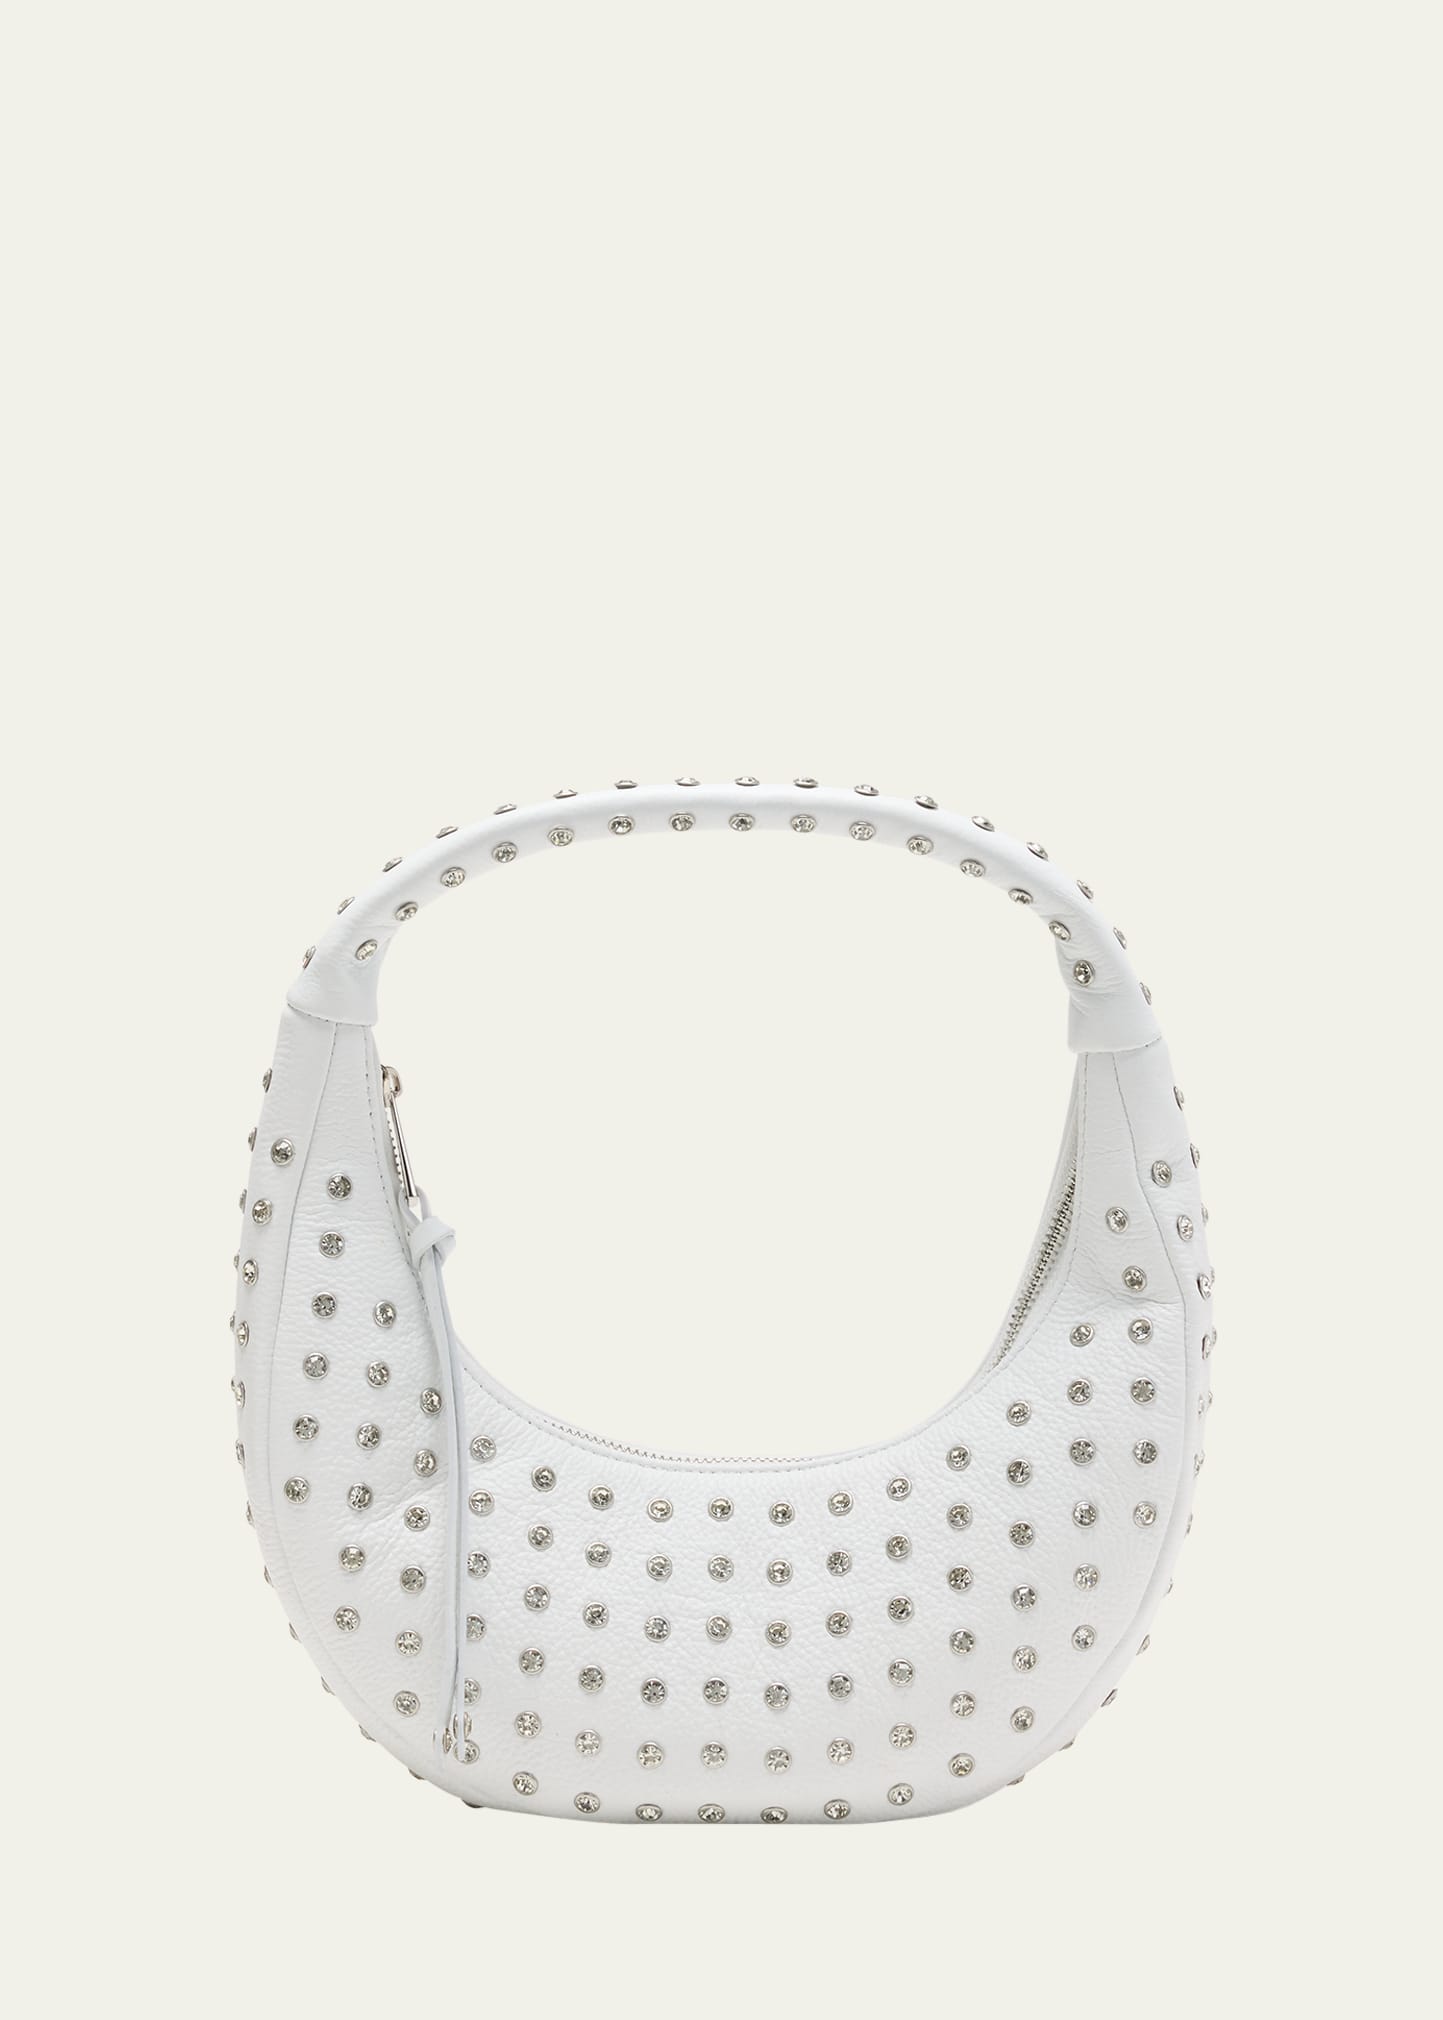 Retroféte Elodie Medium Embellished Top-handle Bag In White Silver